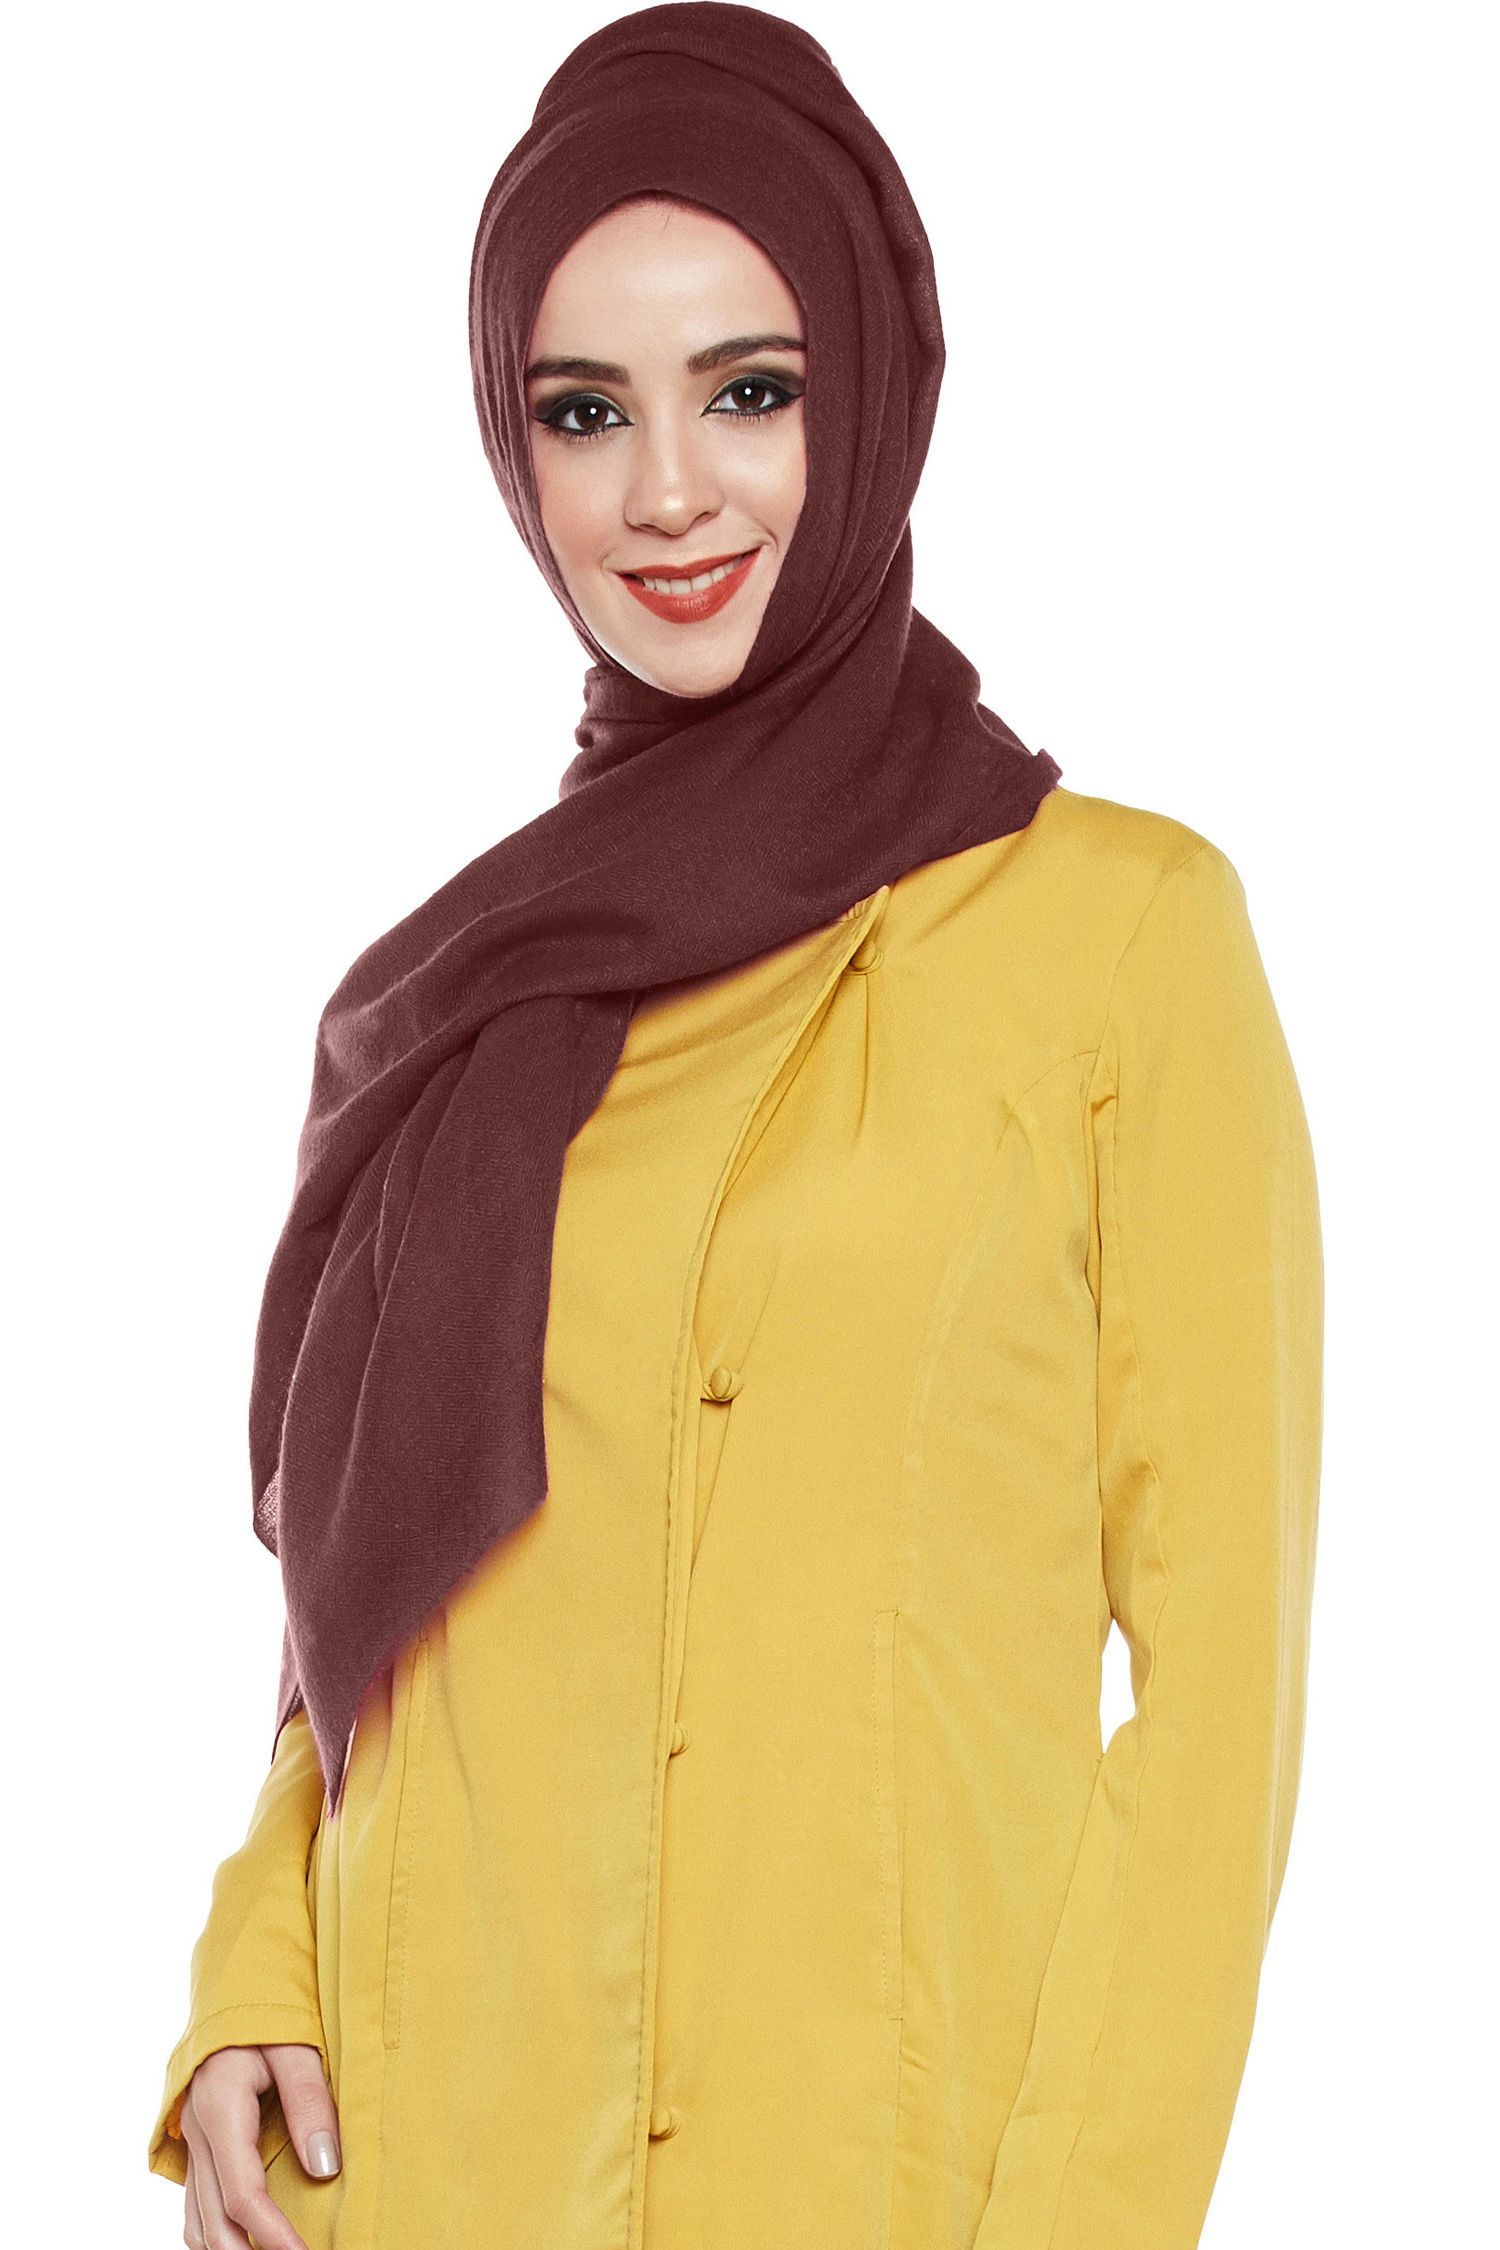 Marsala Pashmina Hijab | Handmade Cashmere Head Scarf